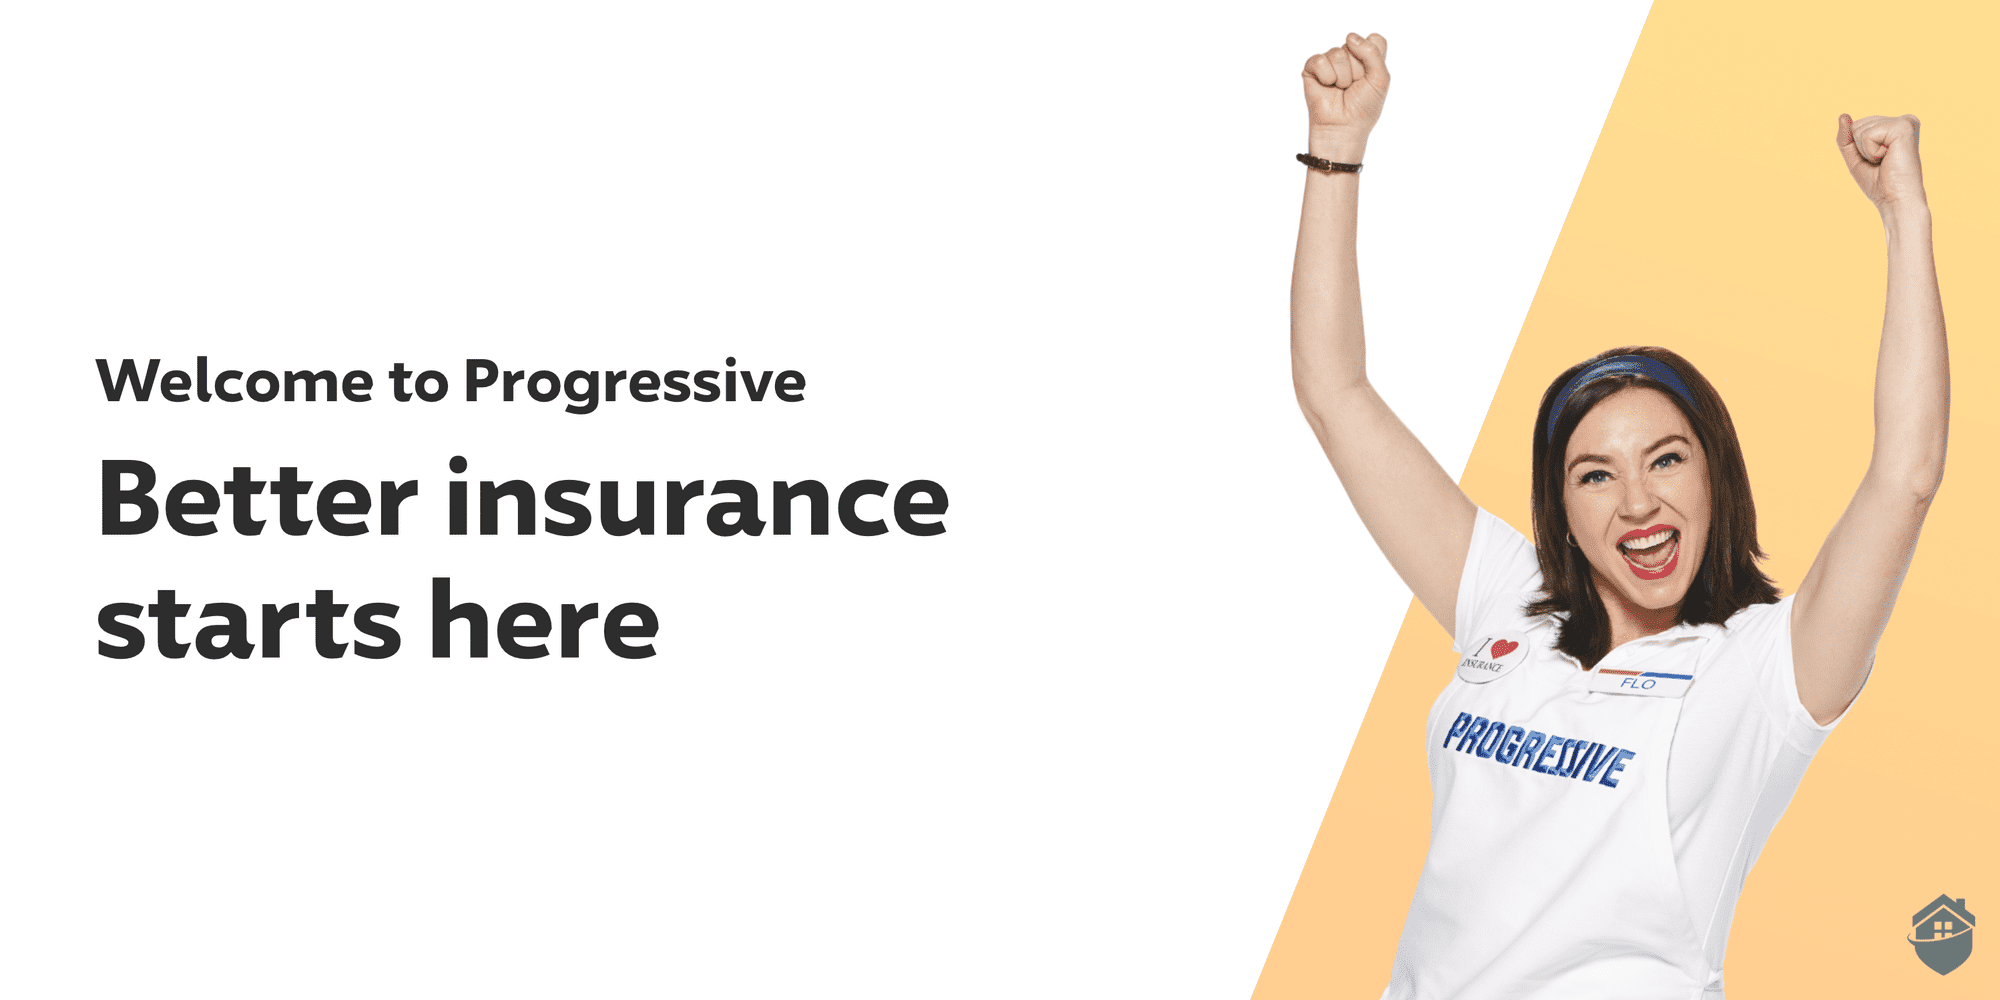 Progressive has been writing insurance policies since 1937.